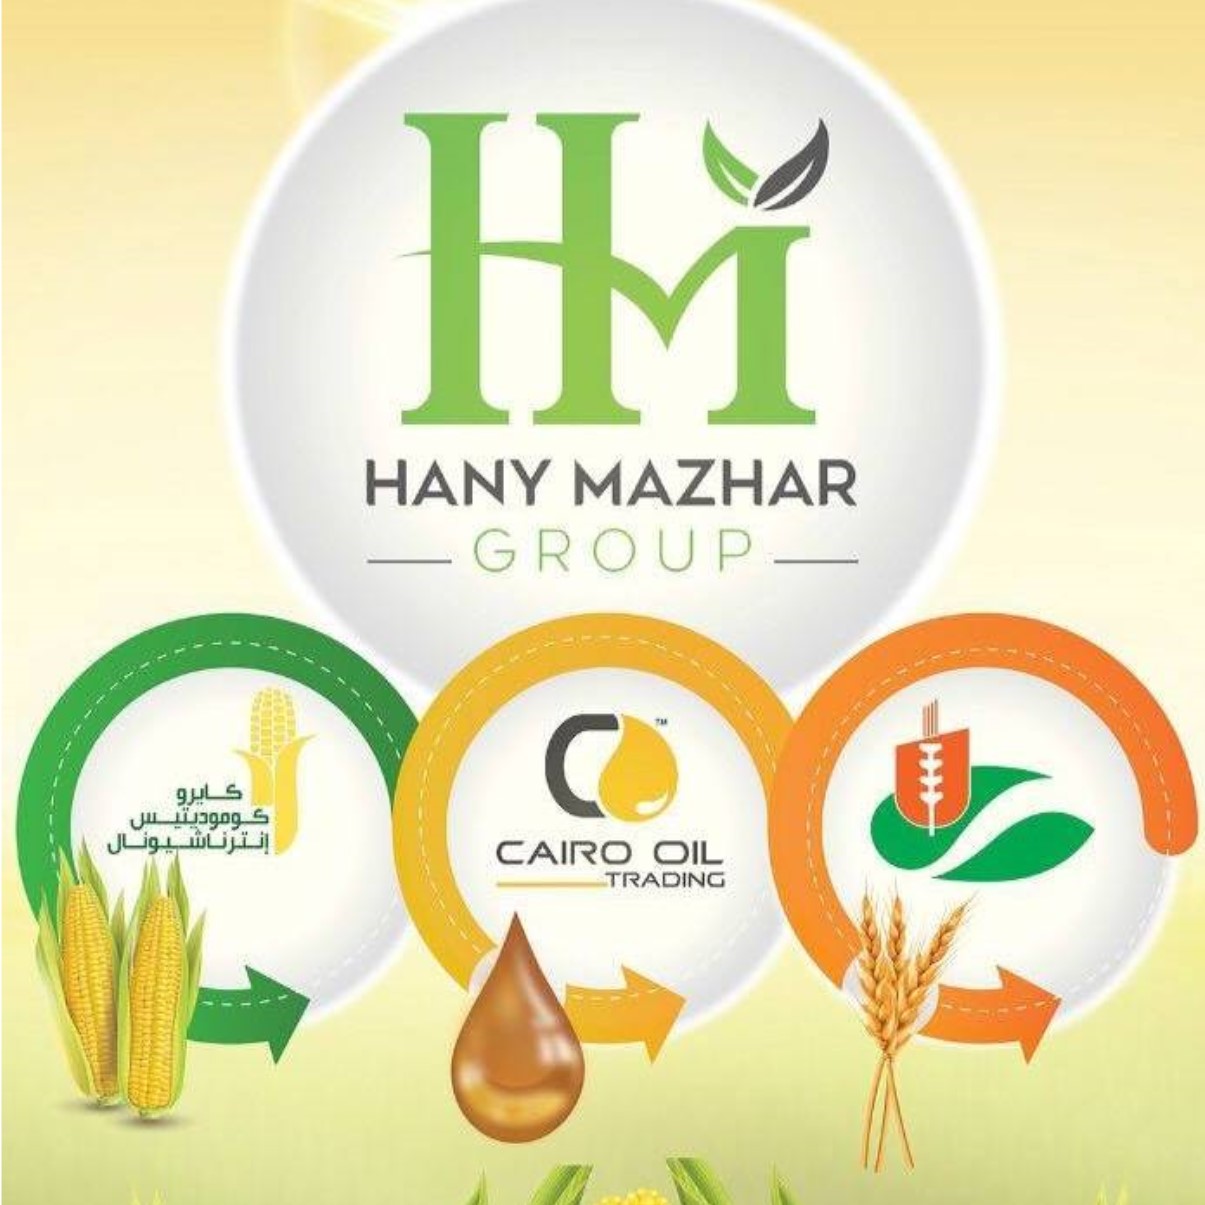 Hany Mazhar Group